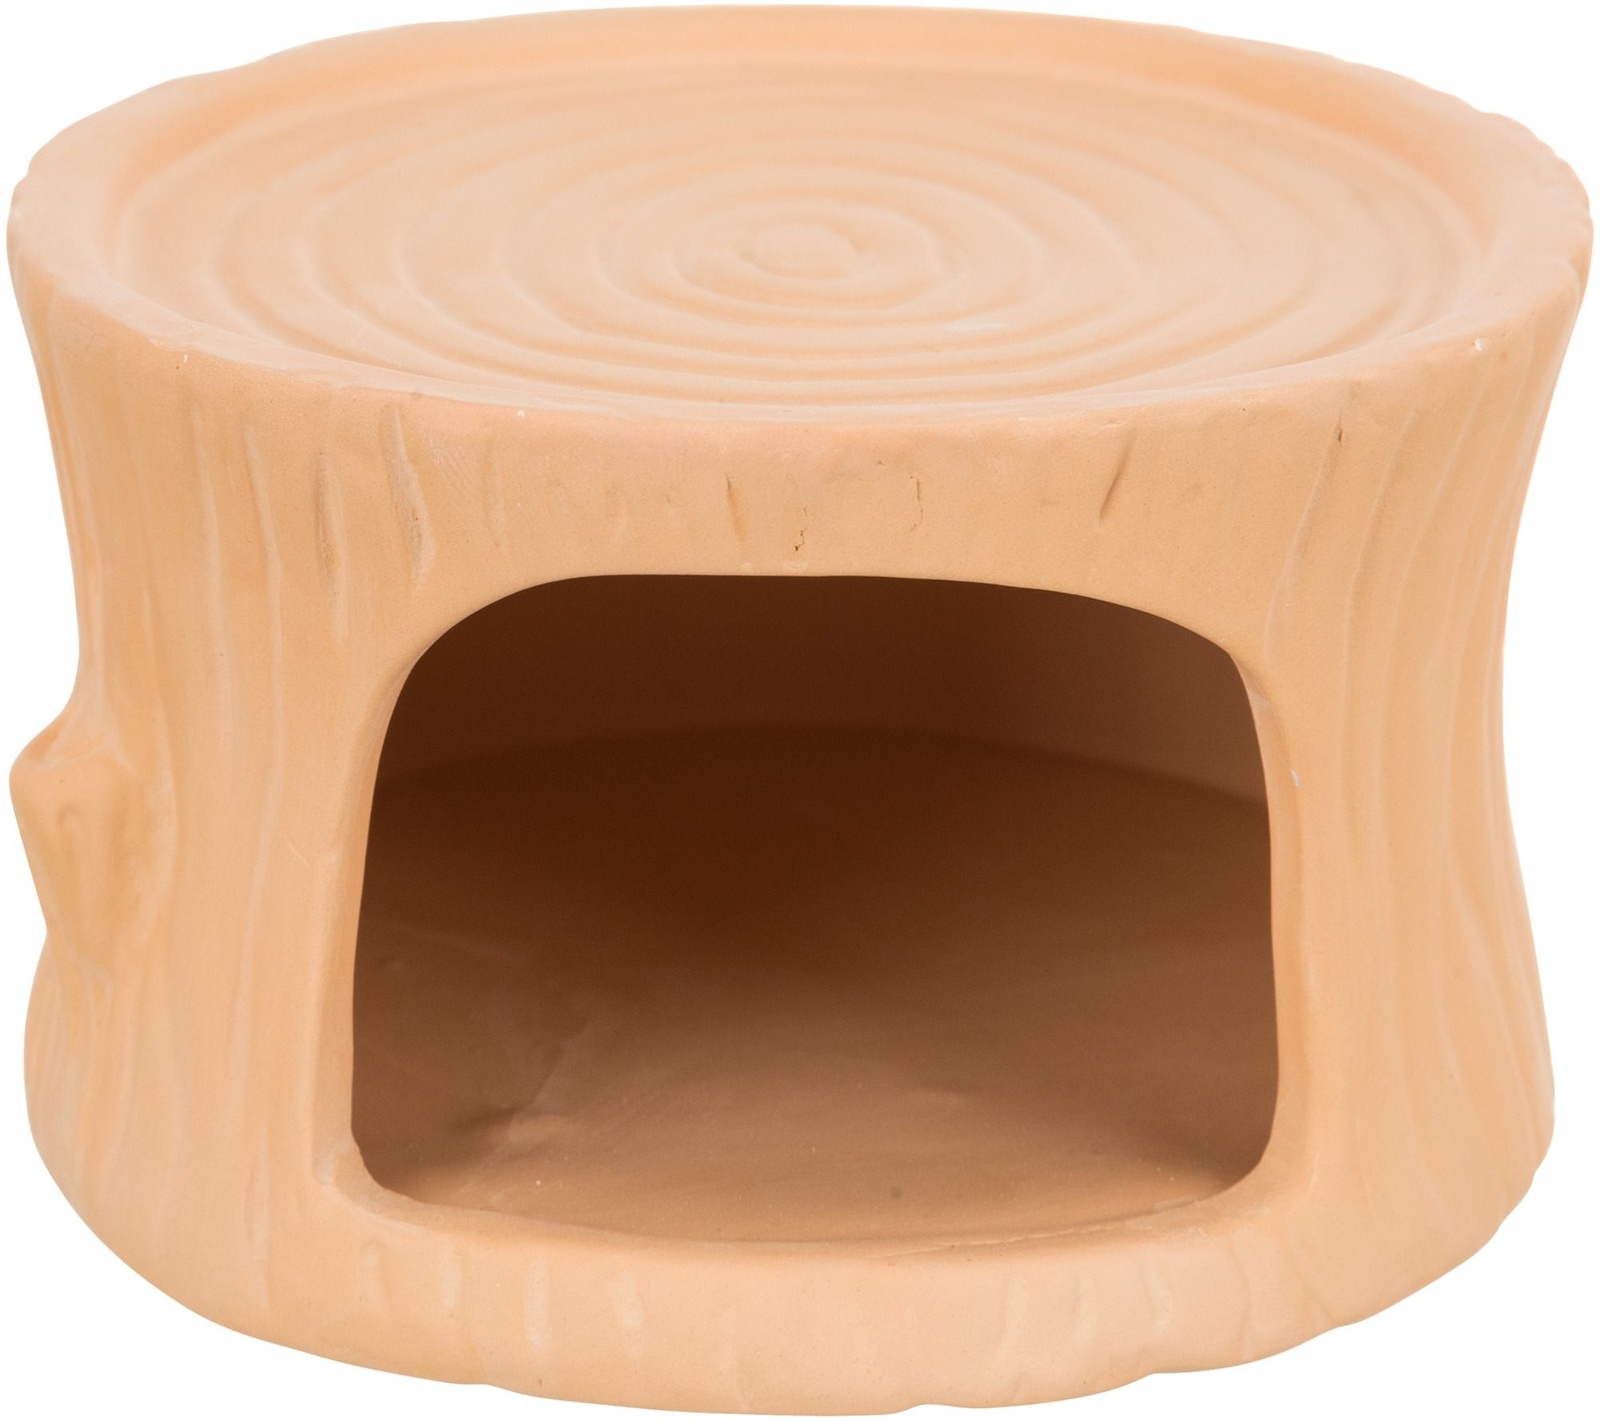 Trixie Trixie домик для мышей и хомяков, керамика, 11 x 6 x 10 см, терракотовый (275 г) trixie trixie домик для мышей керамика терракотовый 330 г